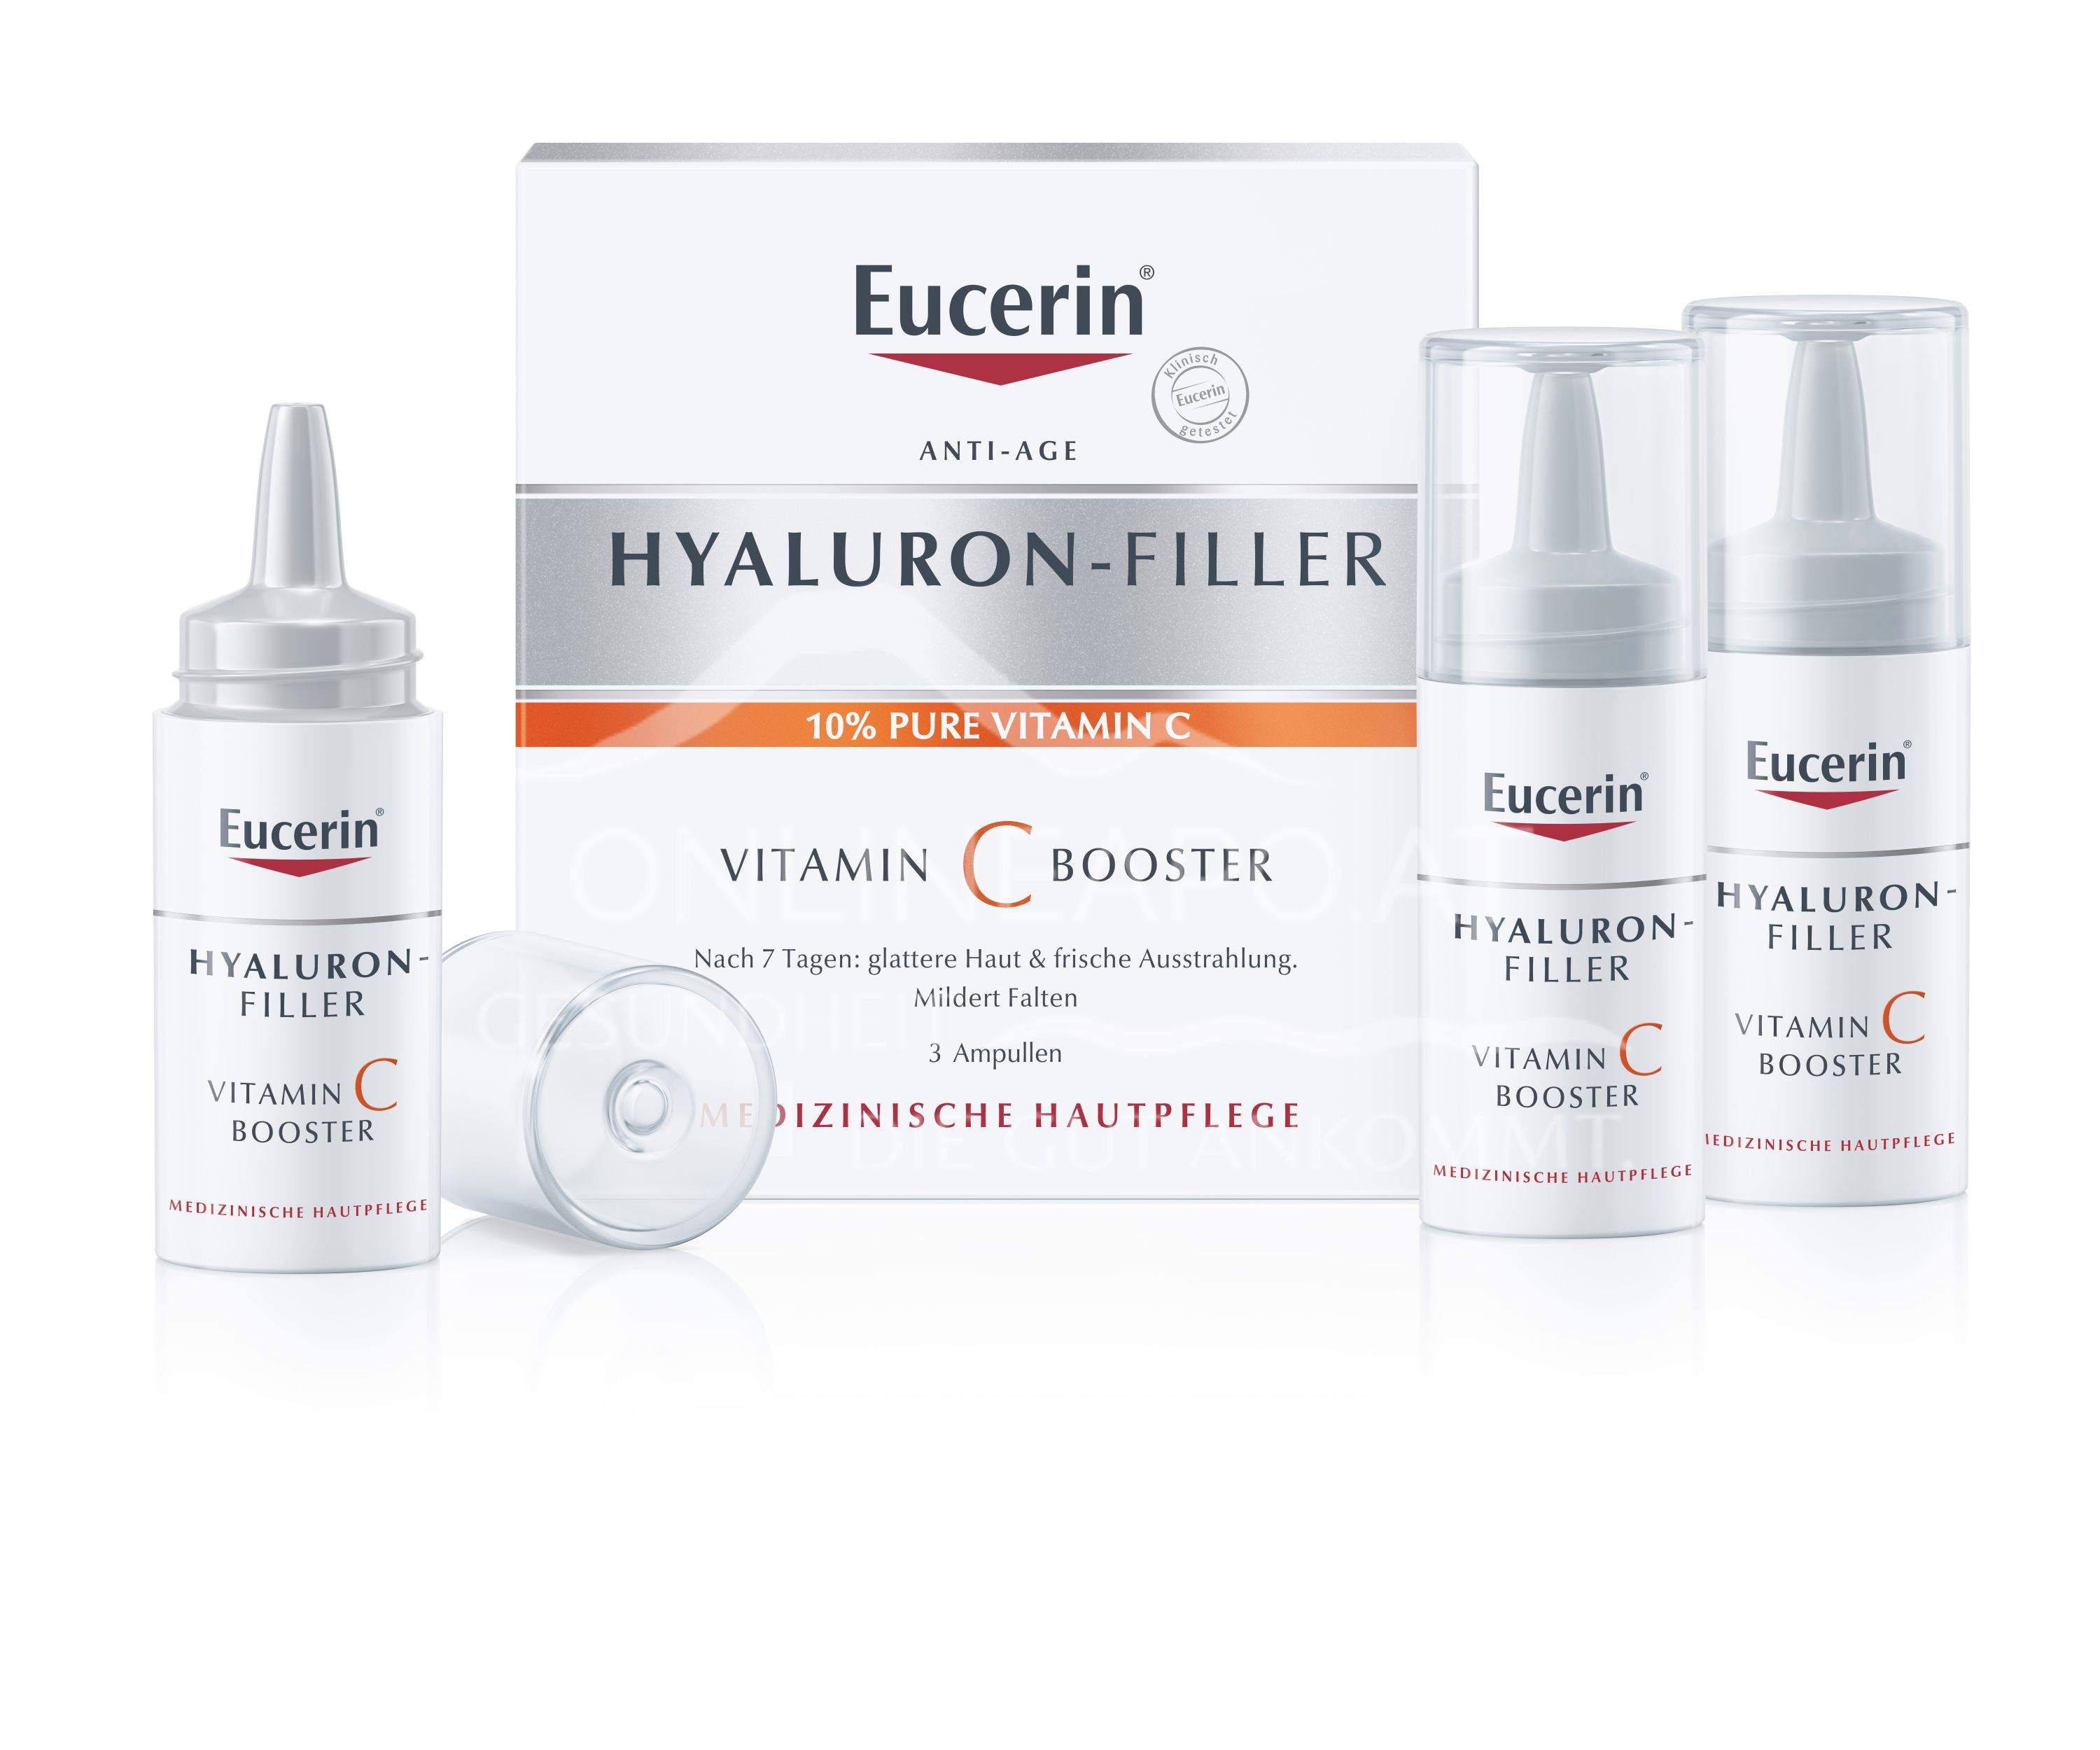 Eucerin® HYALURON-FILLER Vitamin C Booster